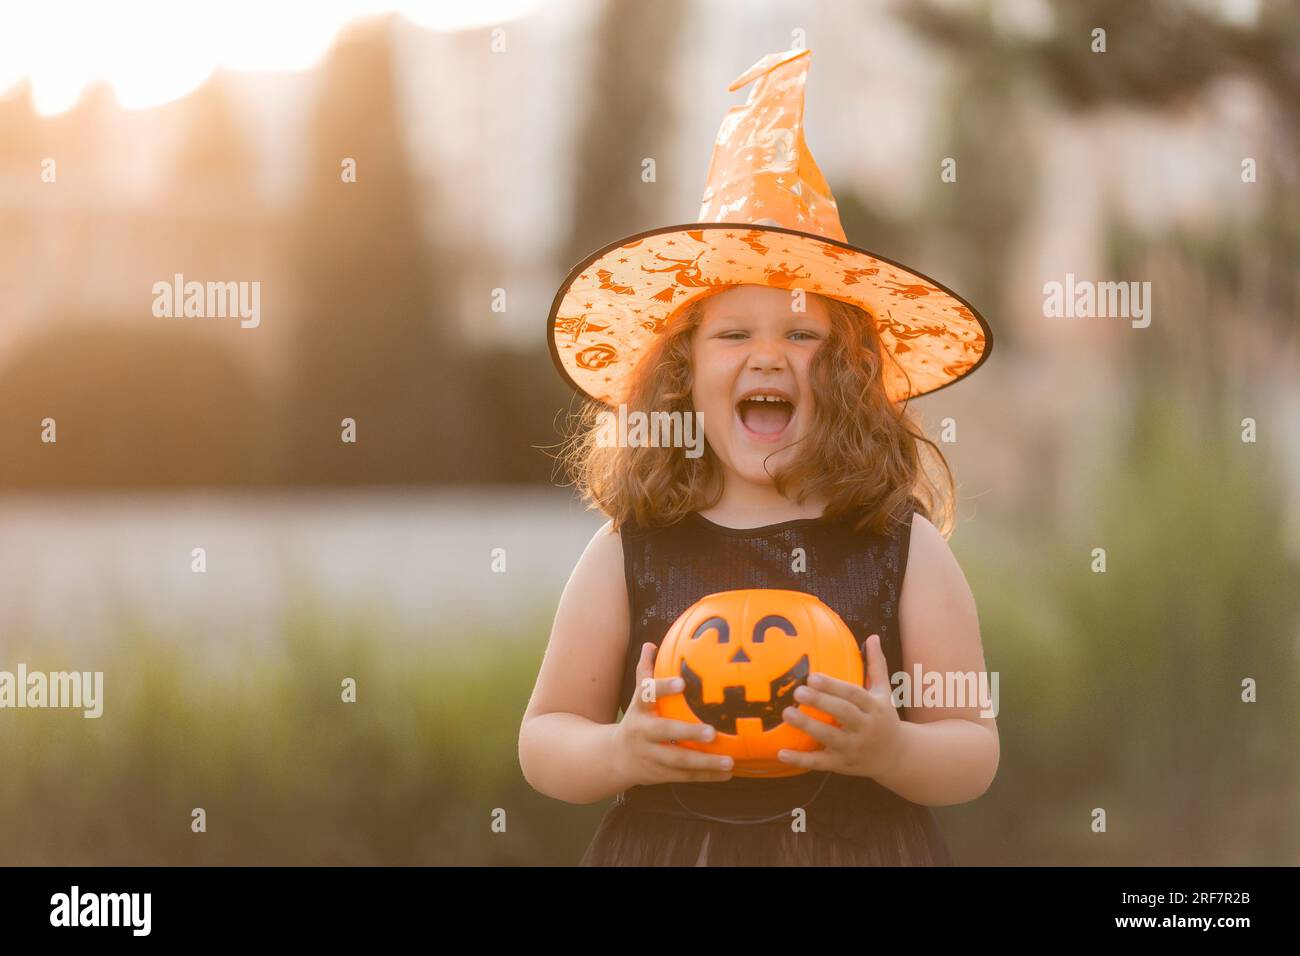 Una graziosa bambina in costume da strega per Halloween cammina nel parco in un cesto di caramelle a forma di zucca. Foto di alta qualità Foto Stock